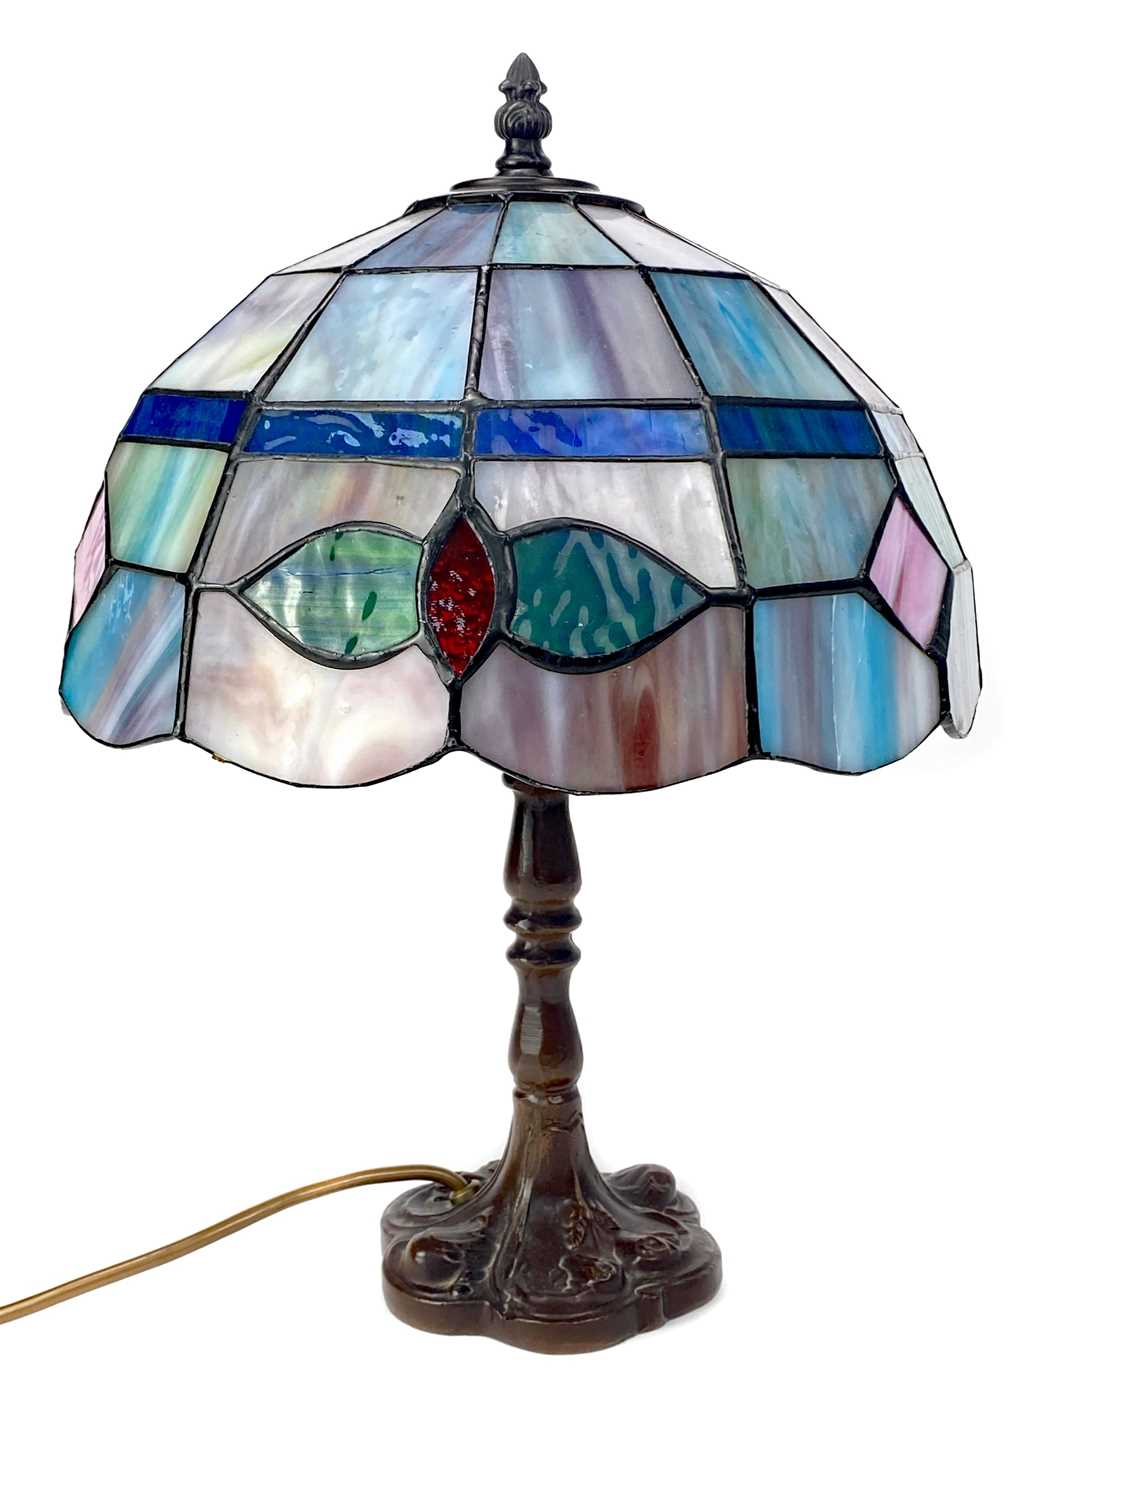 Lot 1648 - A CONTEMPORARY TIFFANY STYLE LAMP